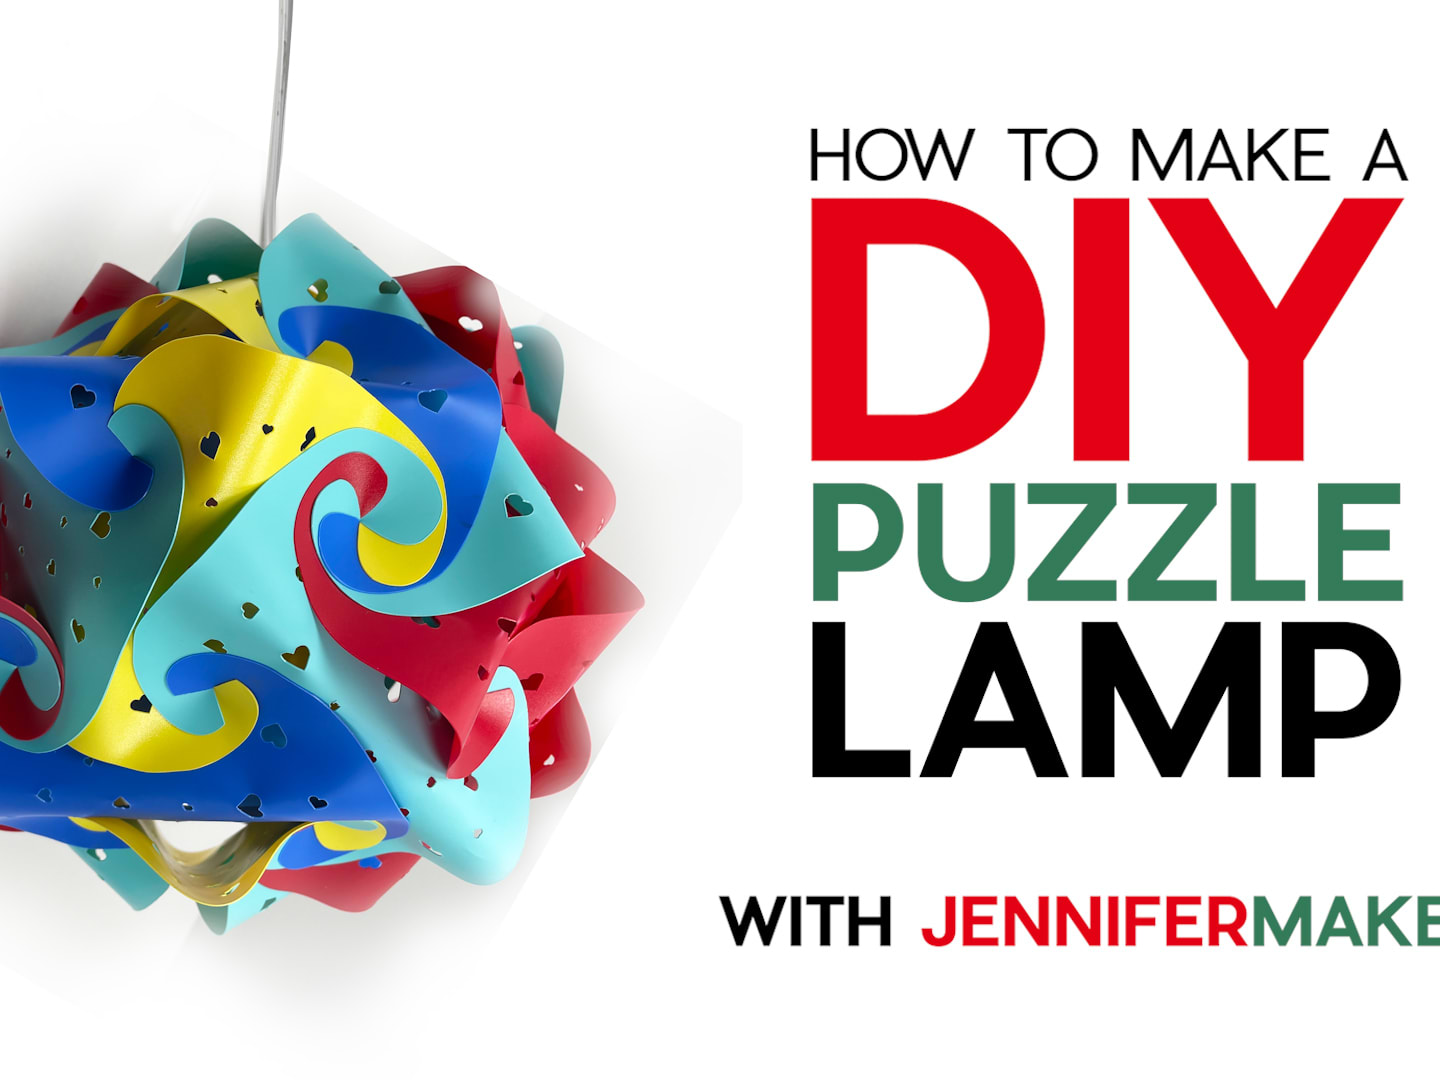 DIY Puzzle Lamp: Let's Make a Fun IQ Lamp! - Jennifer Maker